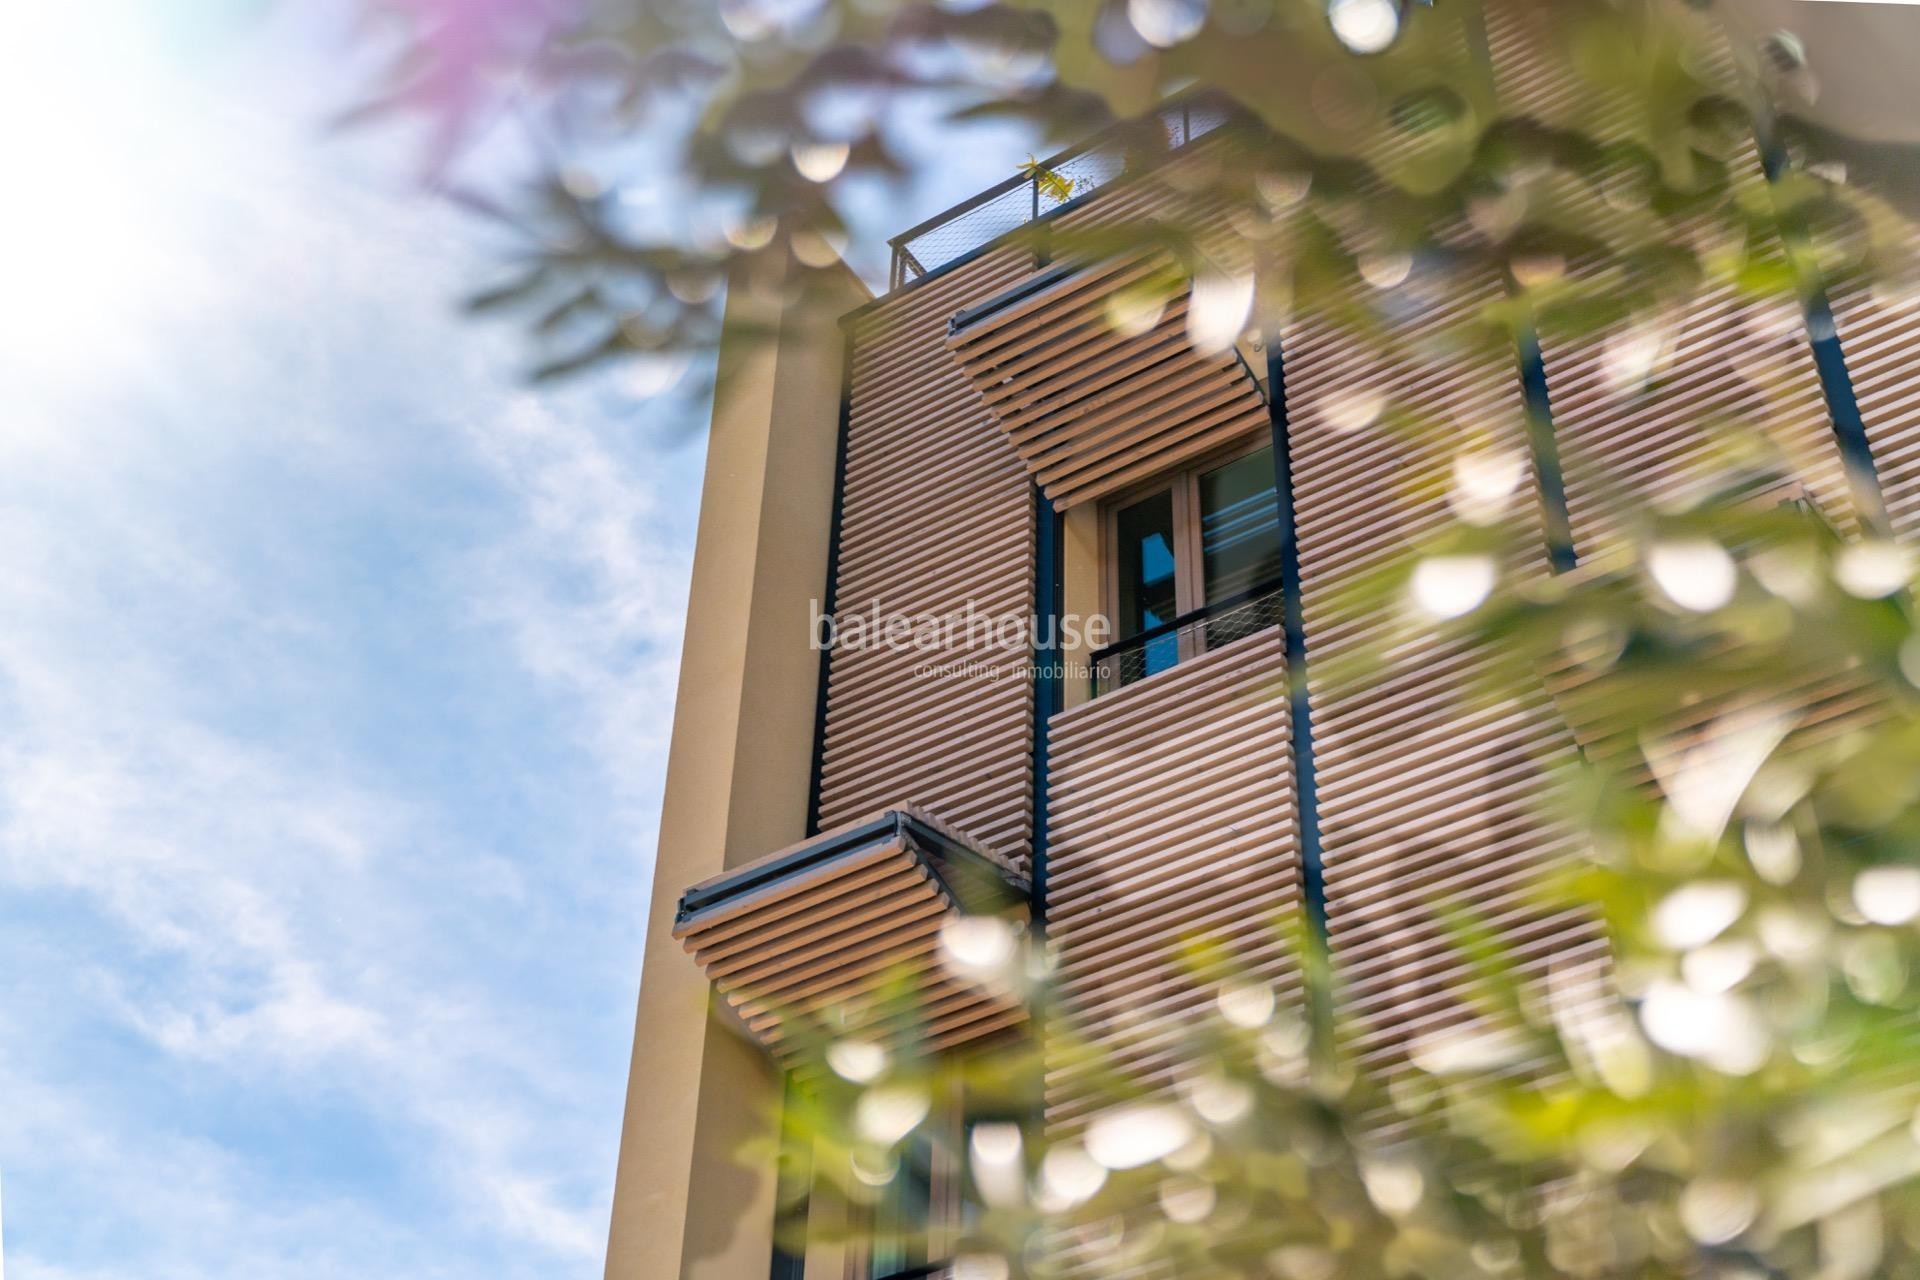 Spektakuläres Penthouse mit innovativer Architektur, privatem Pool und Meerblick in Palma